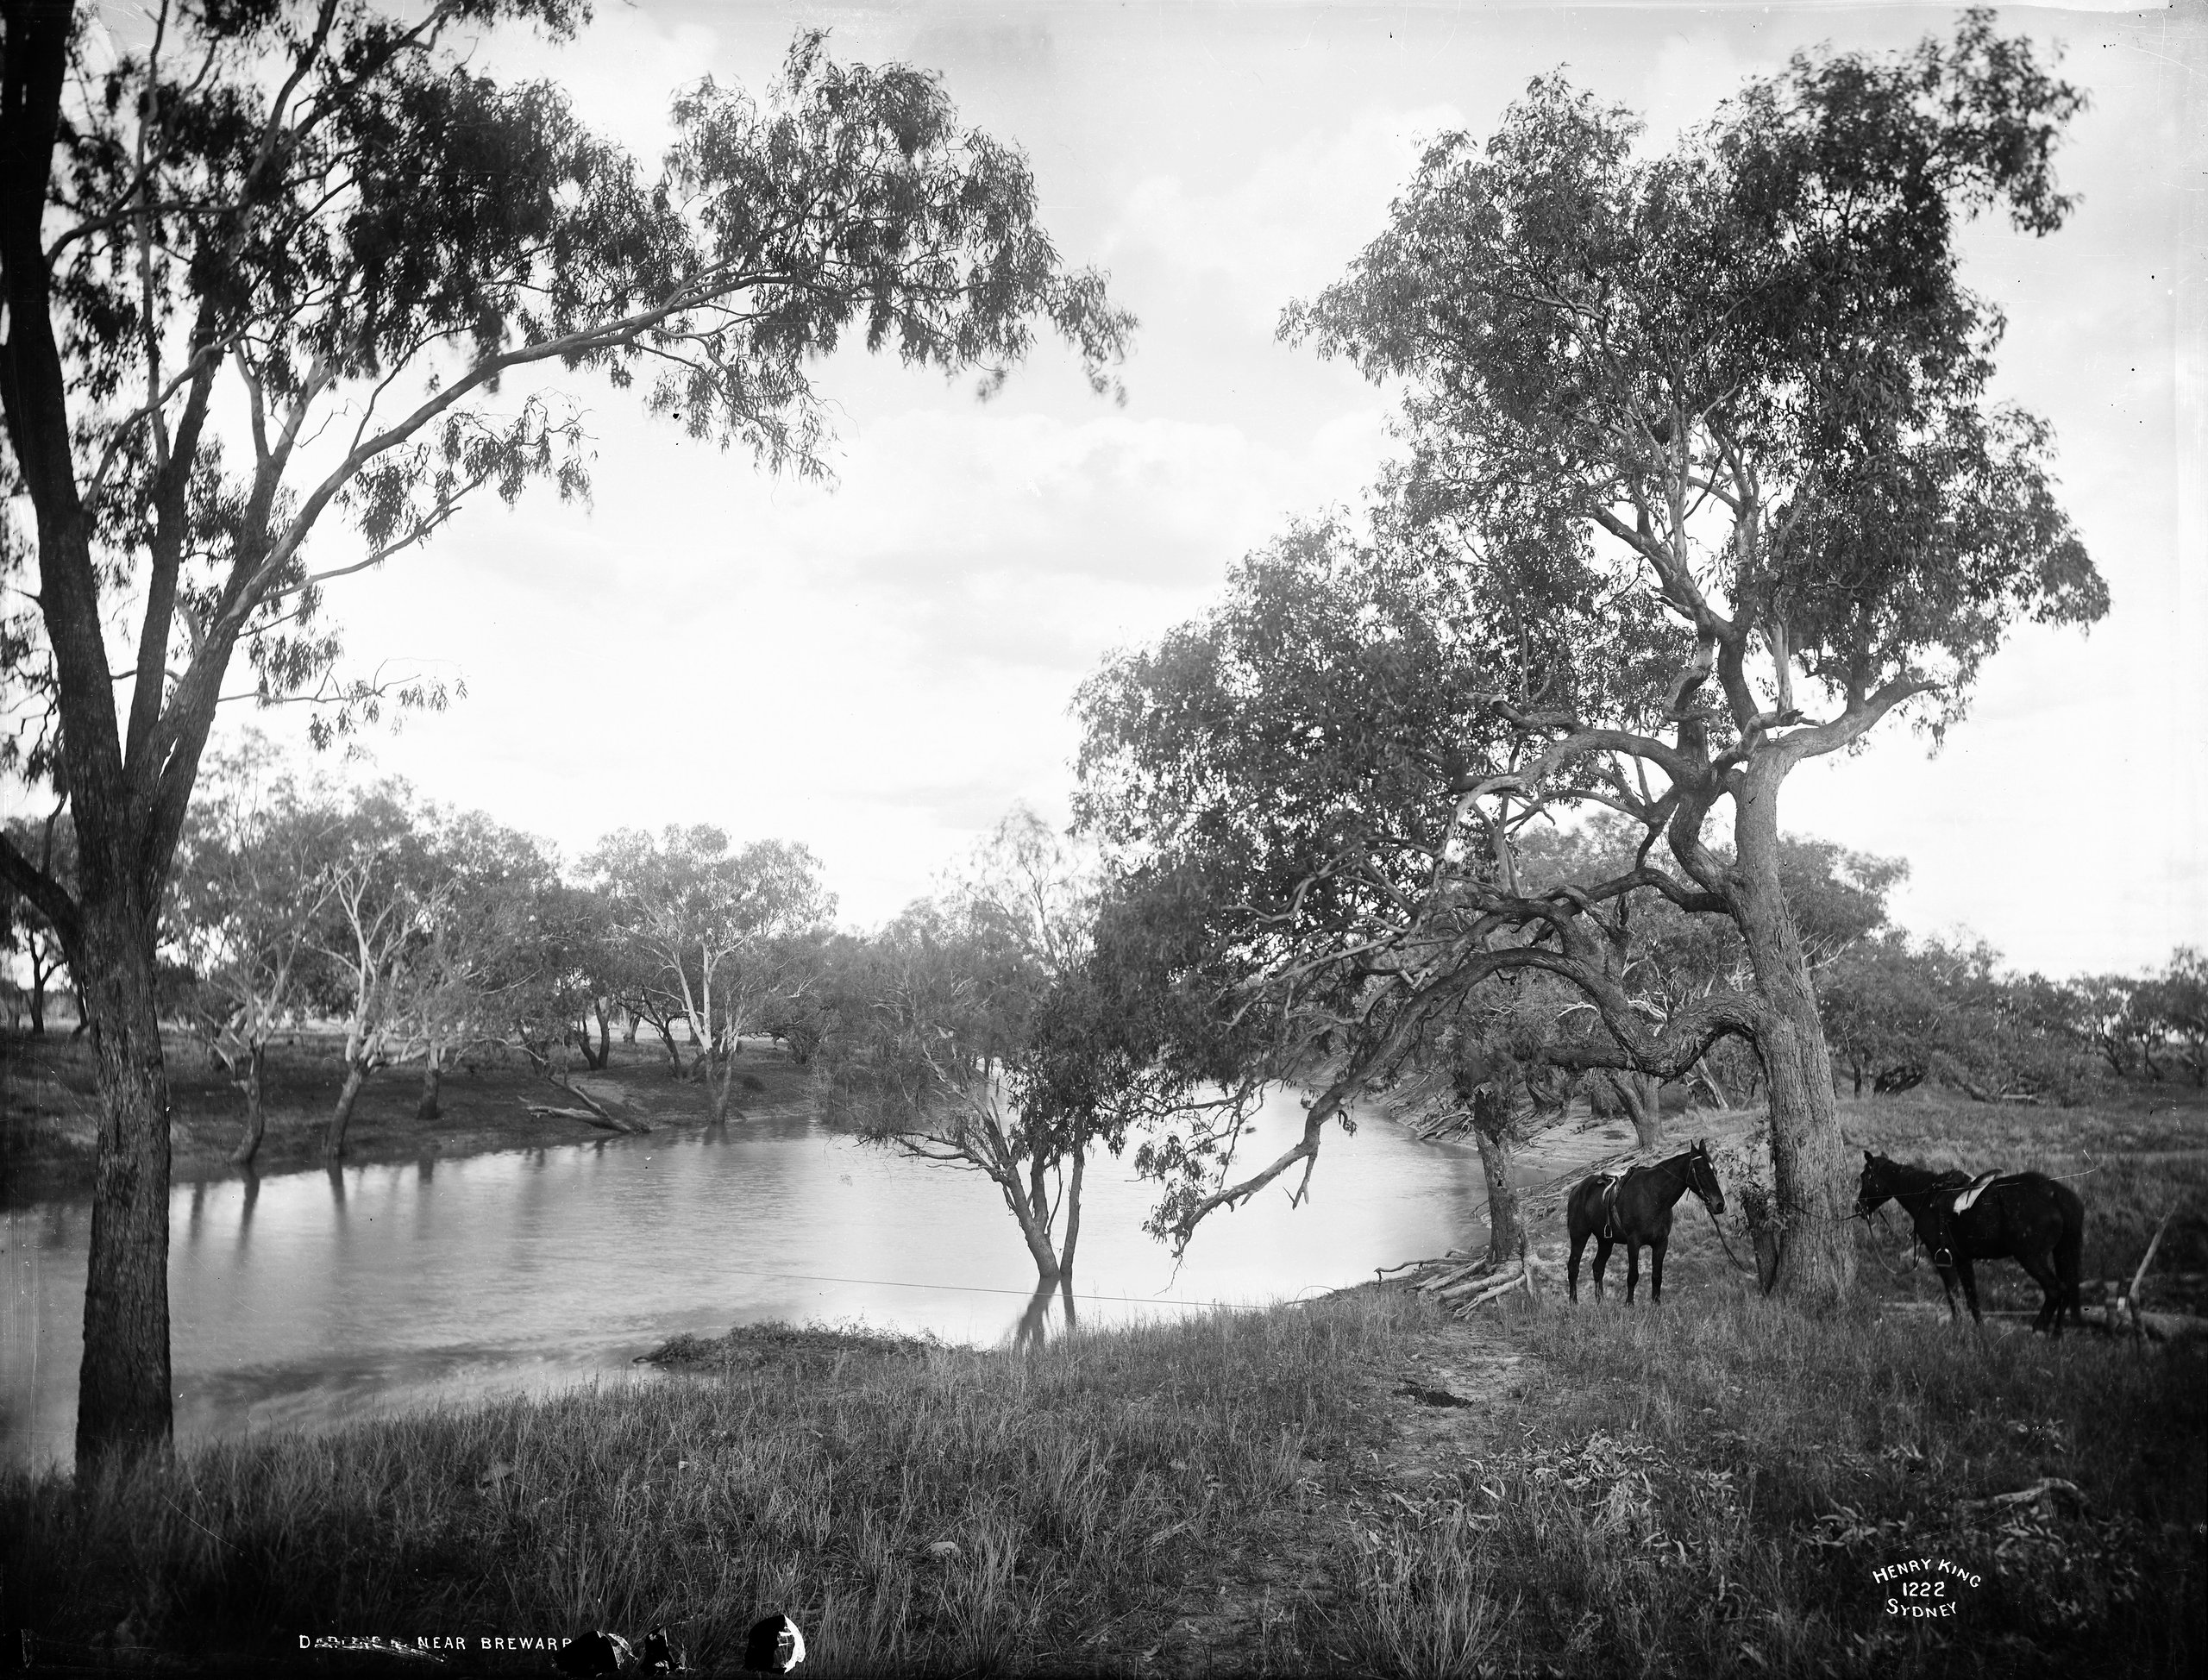 Glass plate negative of Darling River near Brewarrina, NSW, c.1880-1900